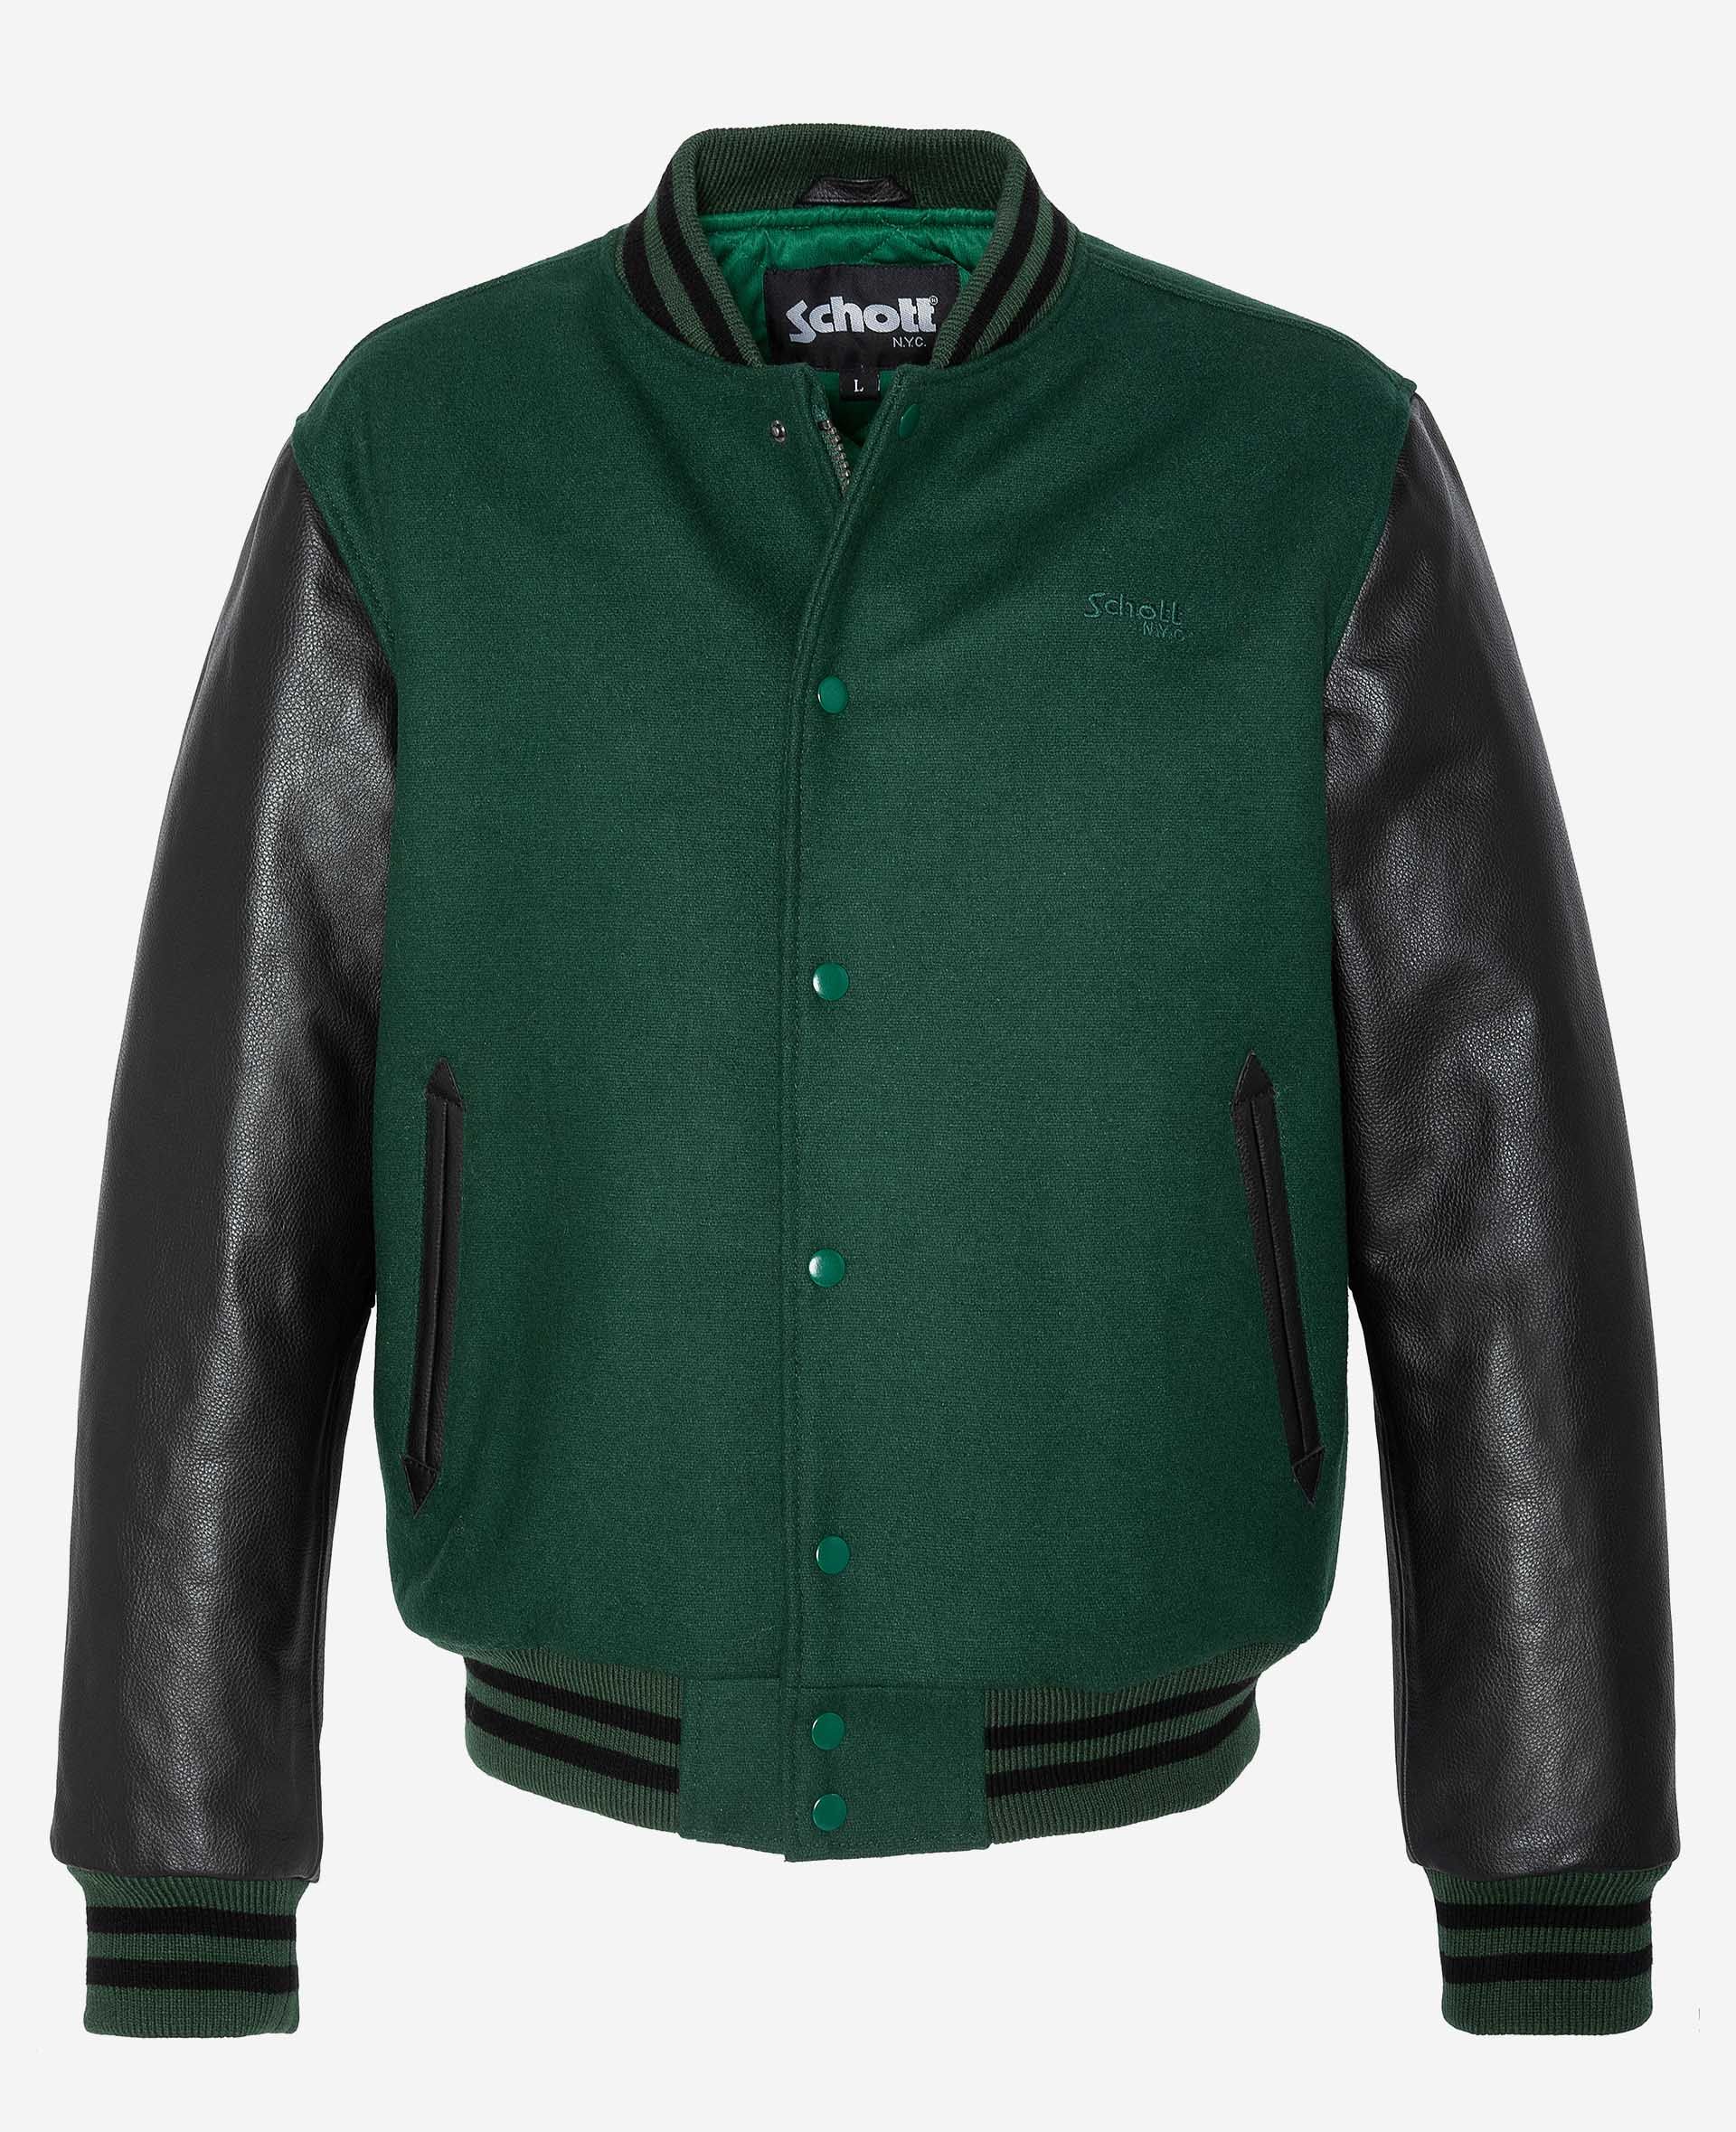 Schott NYC Varsity jacket cowhide leather LC8705 GREEN BLACK